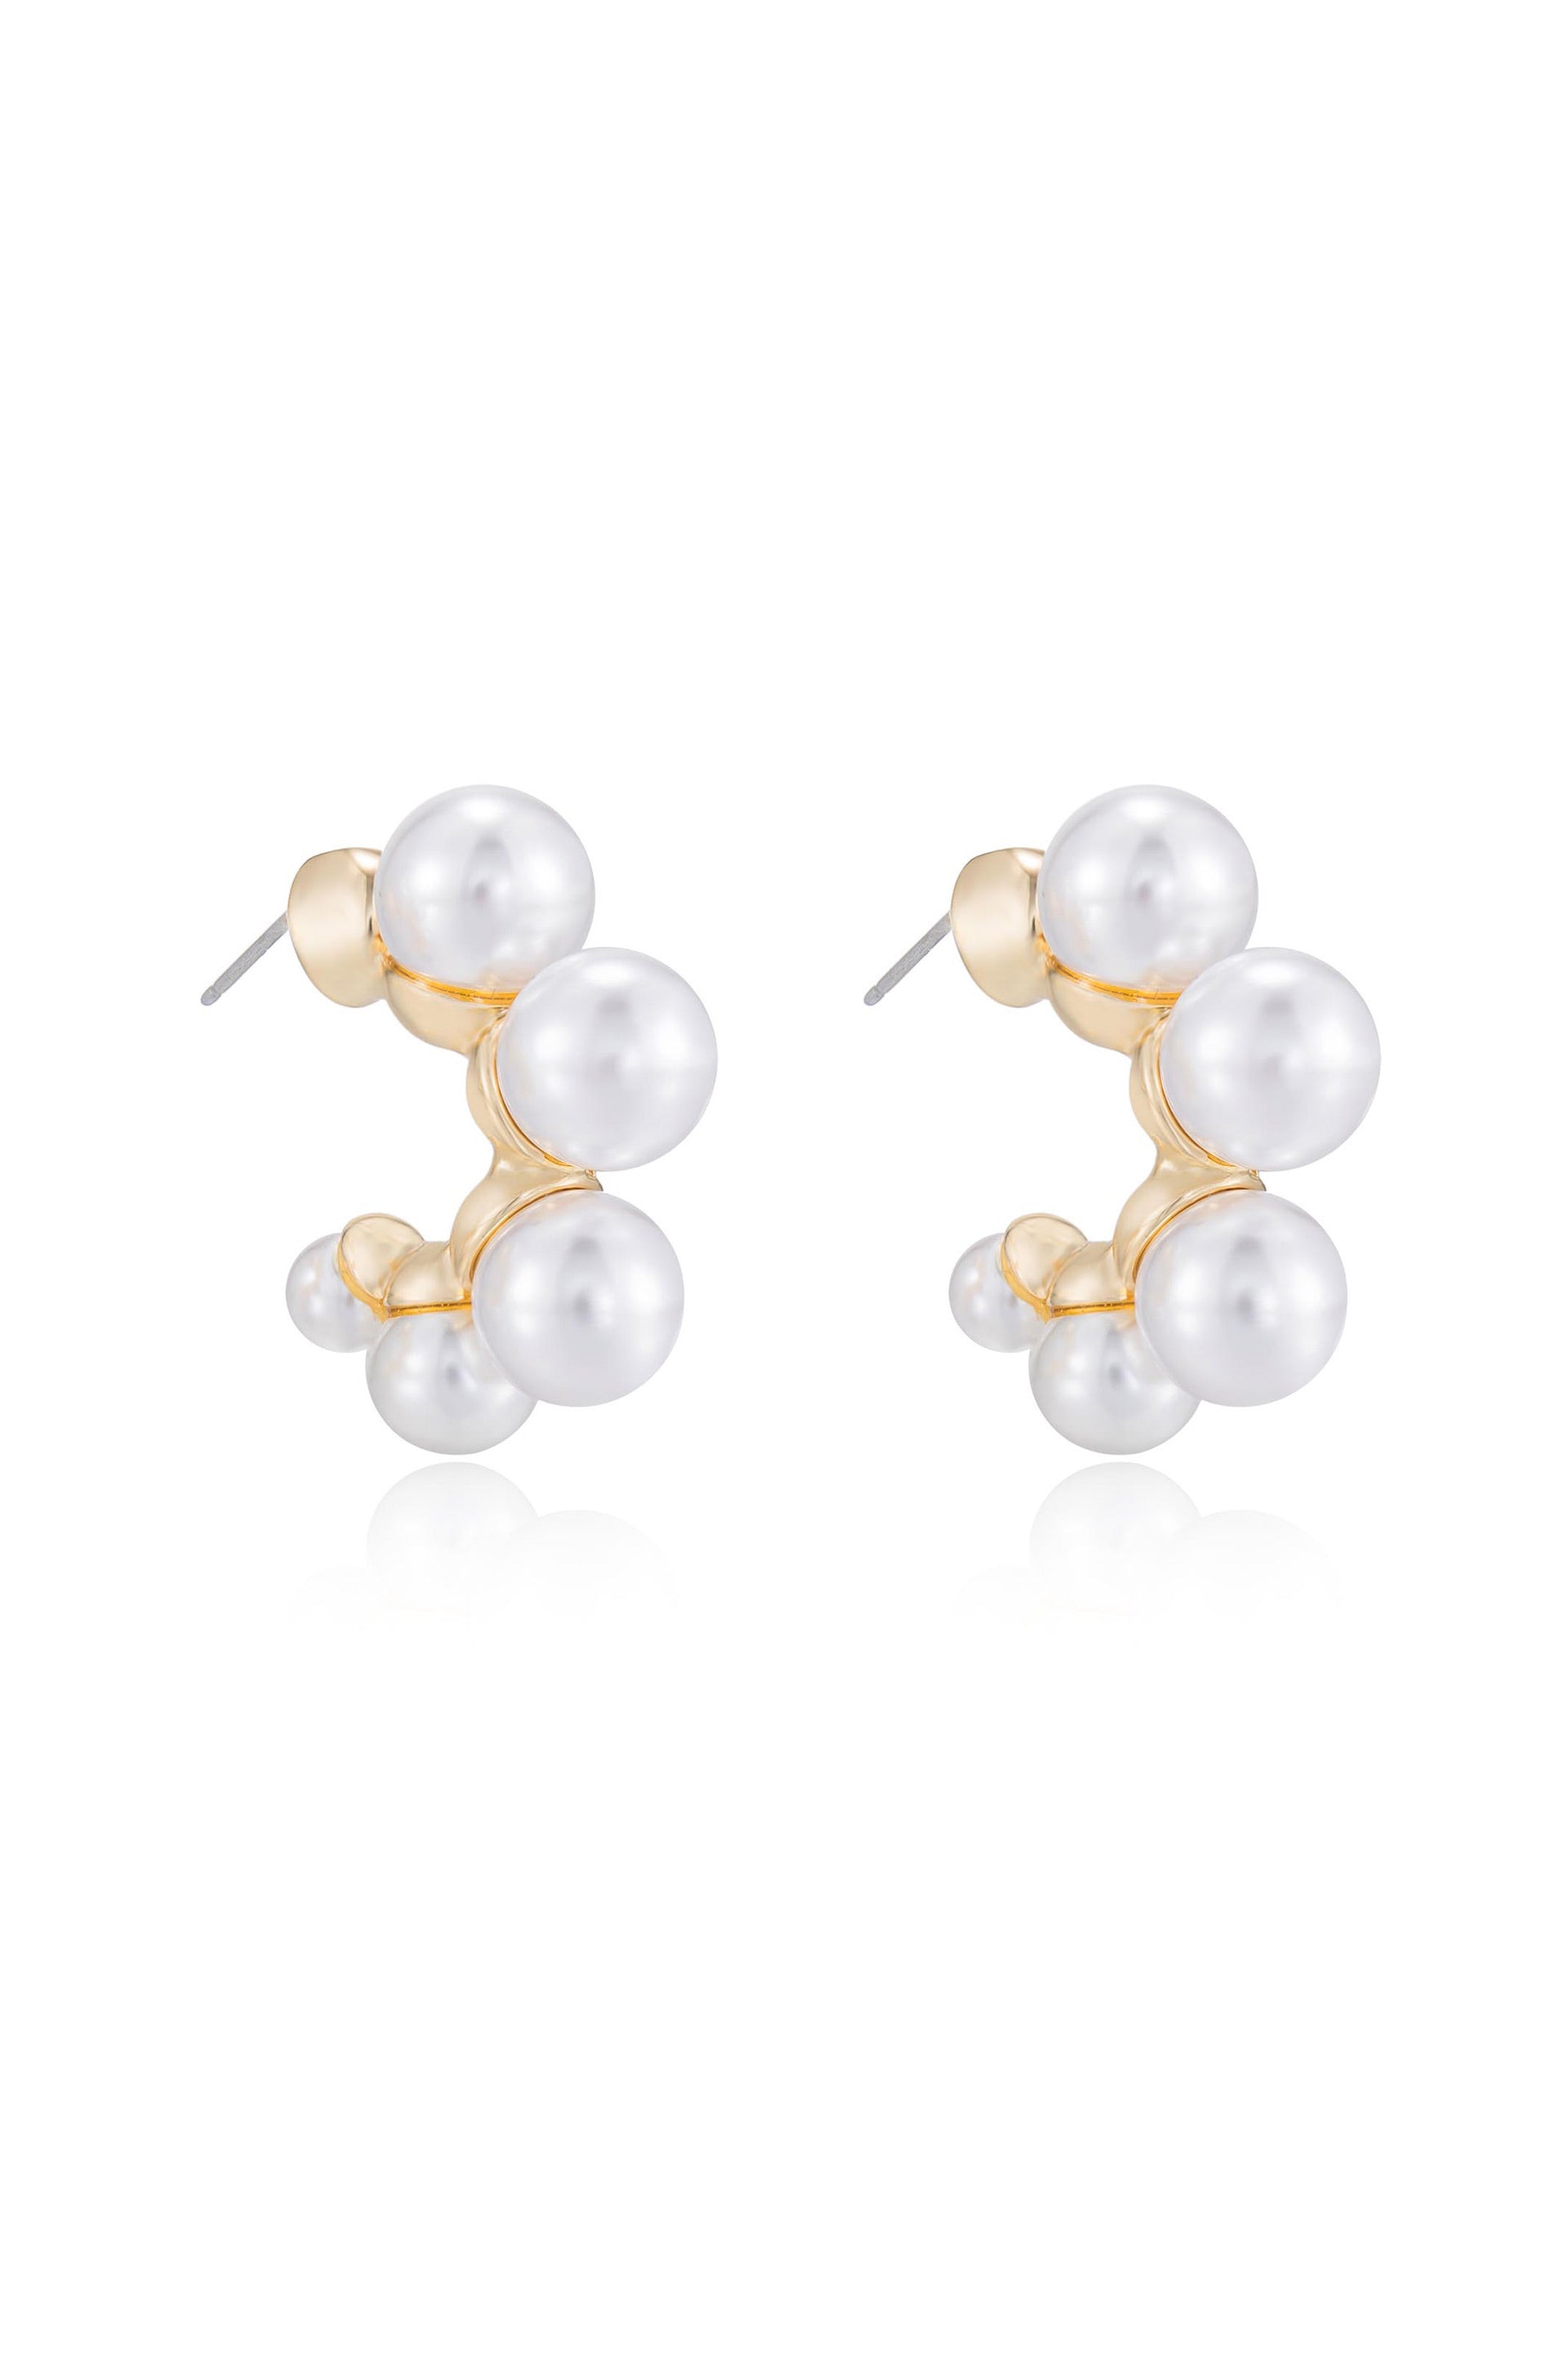 Dazzling Pearl Hoop Earrings - Medium Size in 18K Gold Plating by Talisa